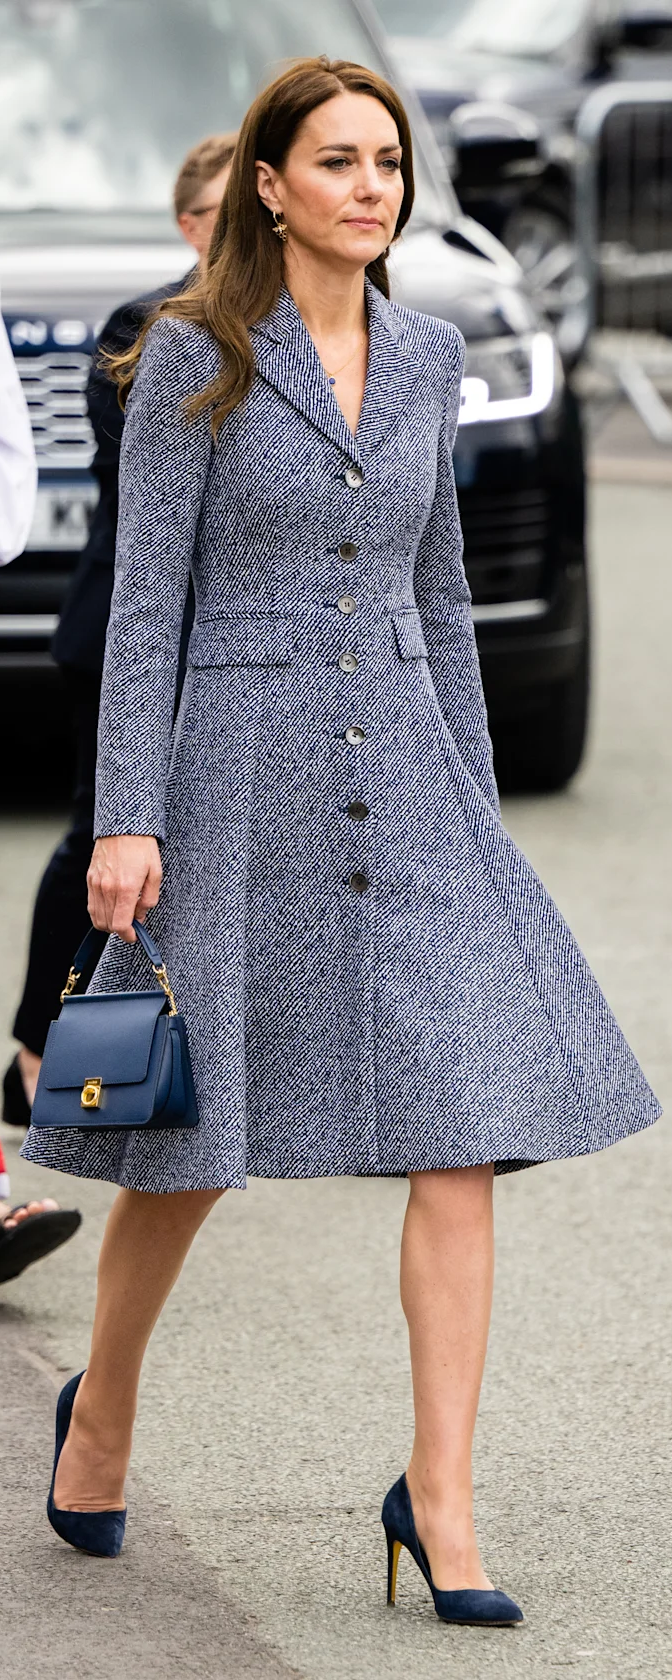 Kate Middleton's Strathberry Handbags